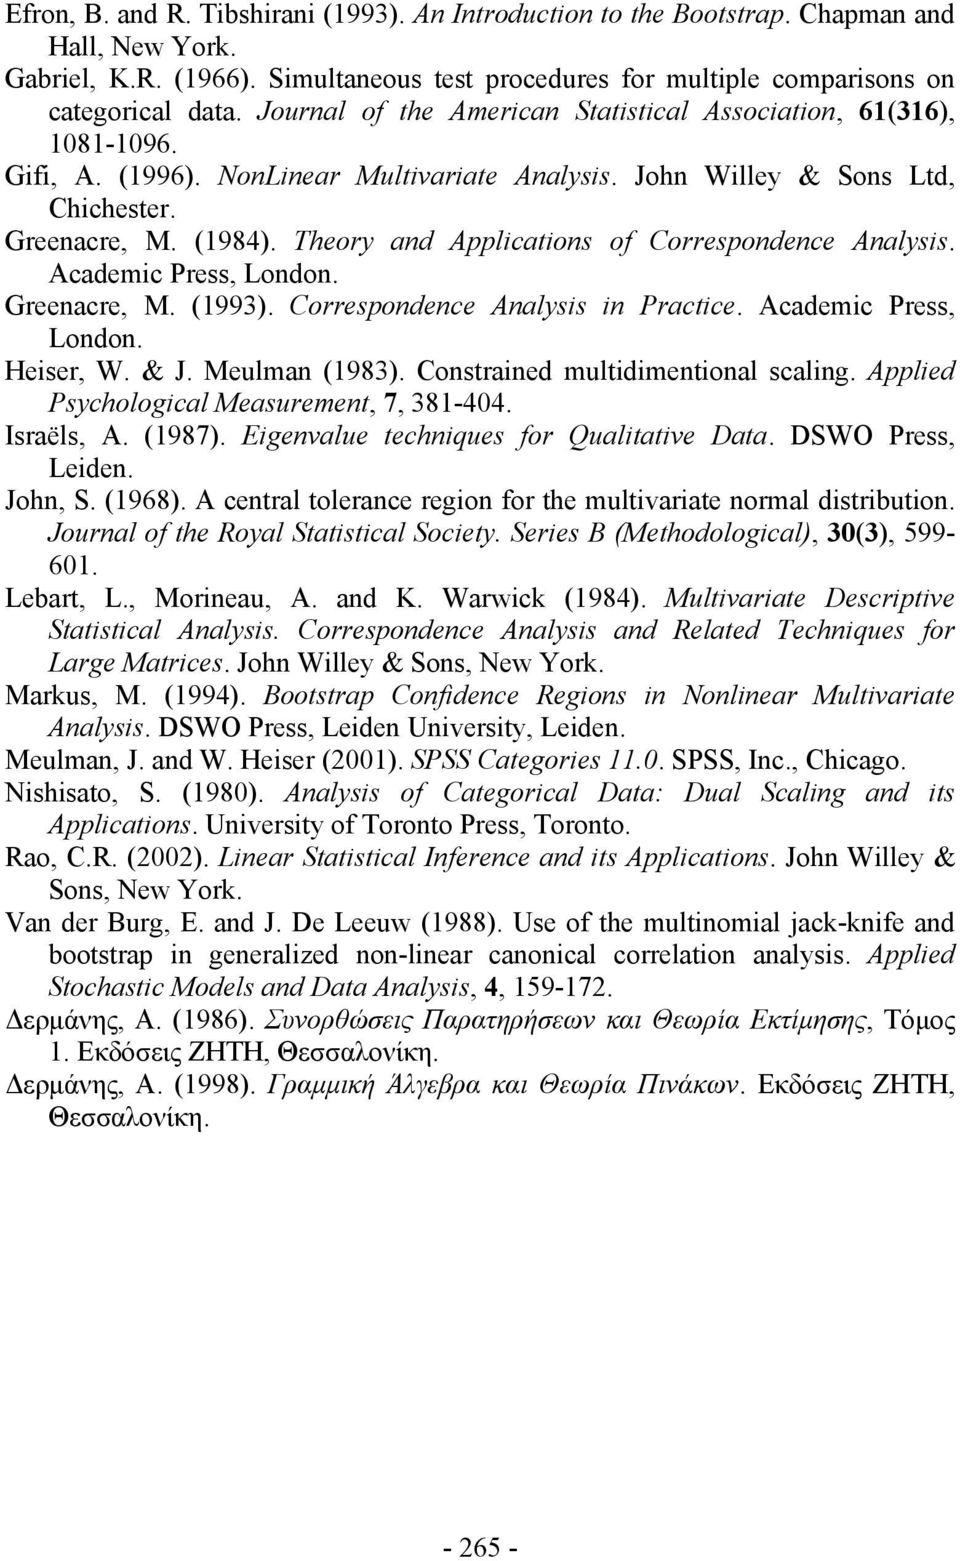 Theory and Applications of Correspondence Analysis. Academic Press, London. Greenacre, M. (1993). Correspondence Analysis in Practice. Academic Press, London. Heiser, W. & J. Melman (1983).